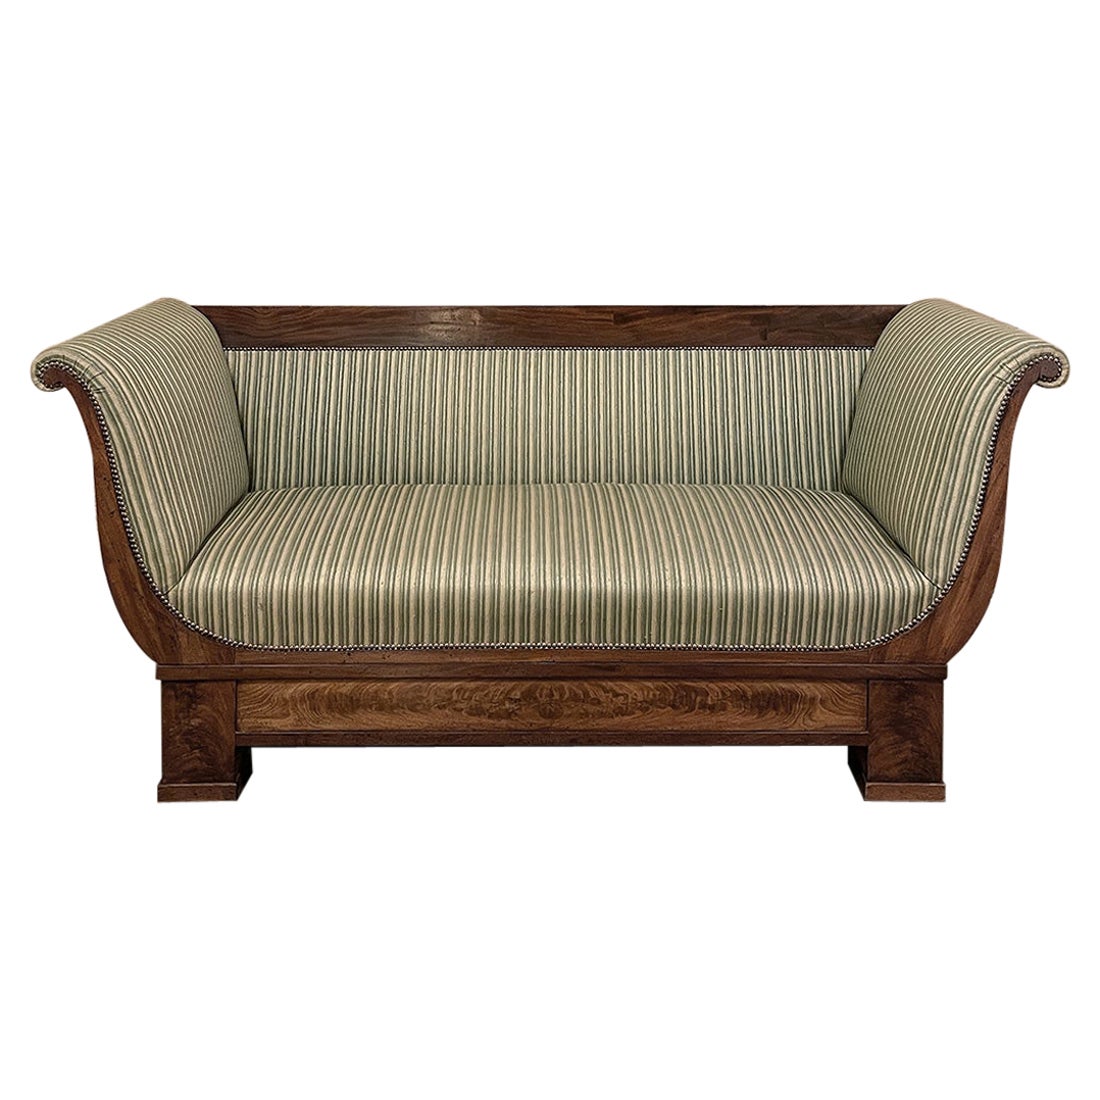 19th Century French Charles X Mahogany Sofa For Sale